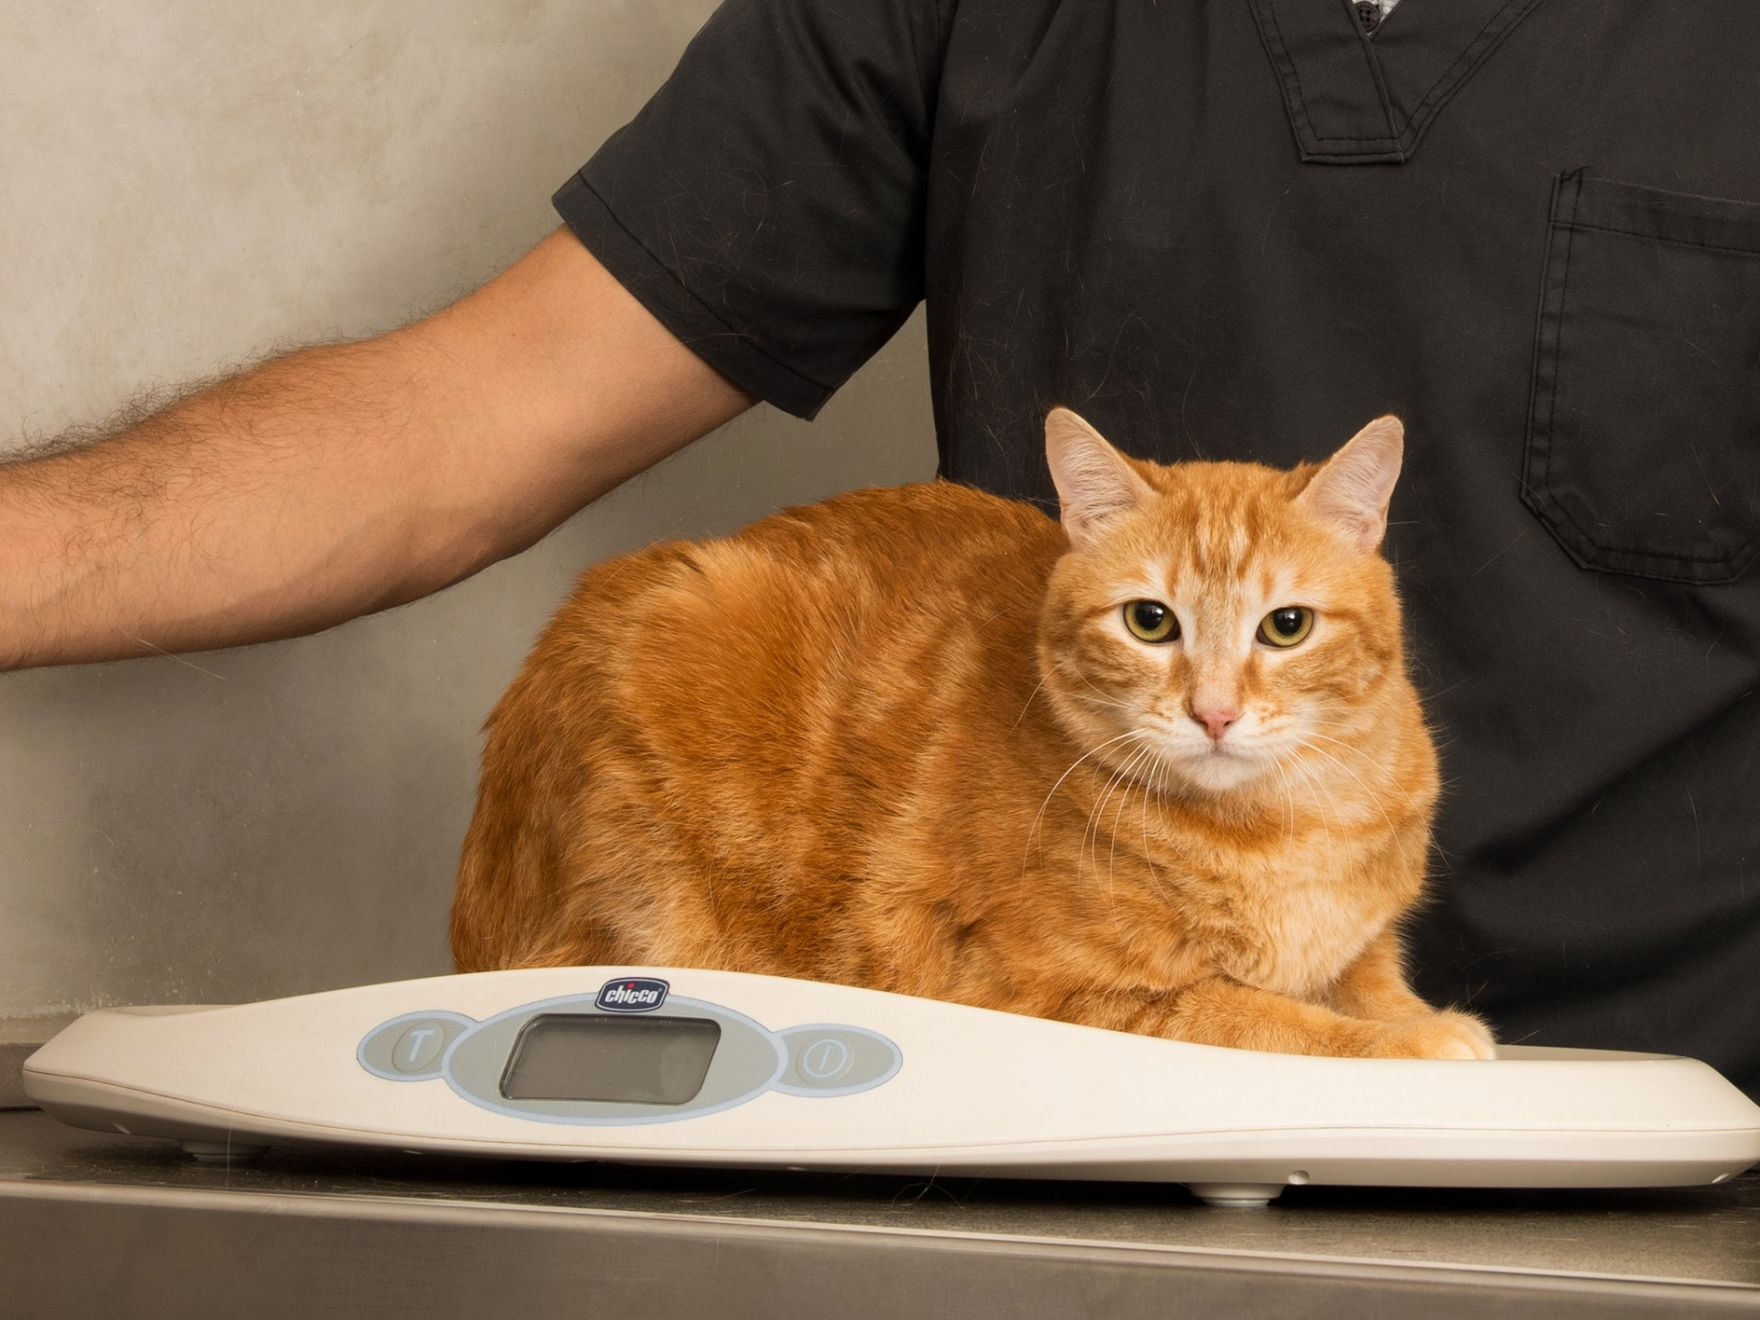 https://cdn.royalcanin-weshare-online.io/-mnl_msBG95Xk-RB1P3h/v2/weight-management-cat-healthy-shape-speak-to-your-vet